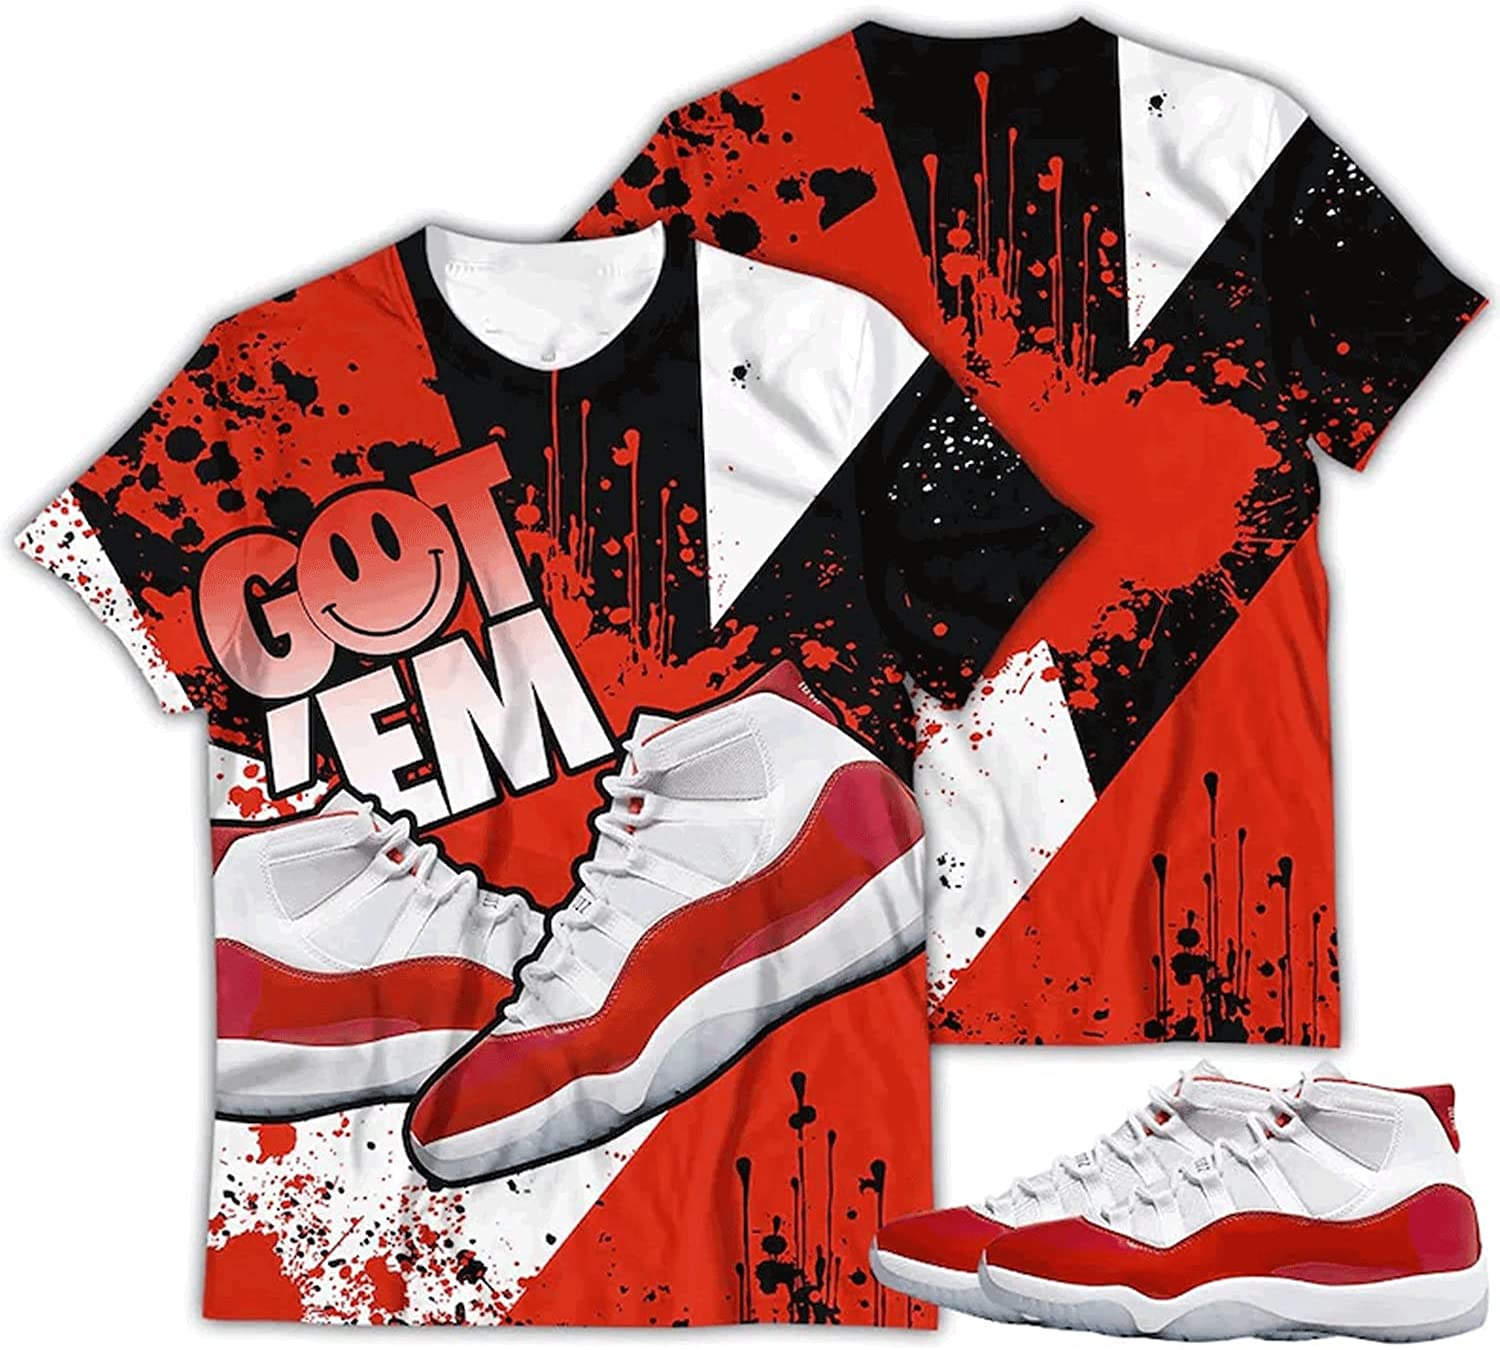 3D Painted Shirt to Match Jordan 11 Retro Cherry, Tee Matching for Sneaker 11 Retro Cherry, Tee Gift for Sneaker Jordan 11 Retro Cherry – JOT043